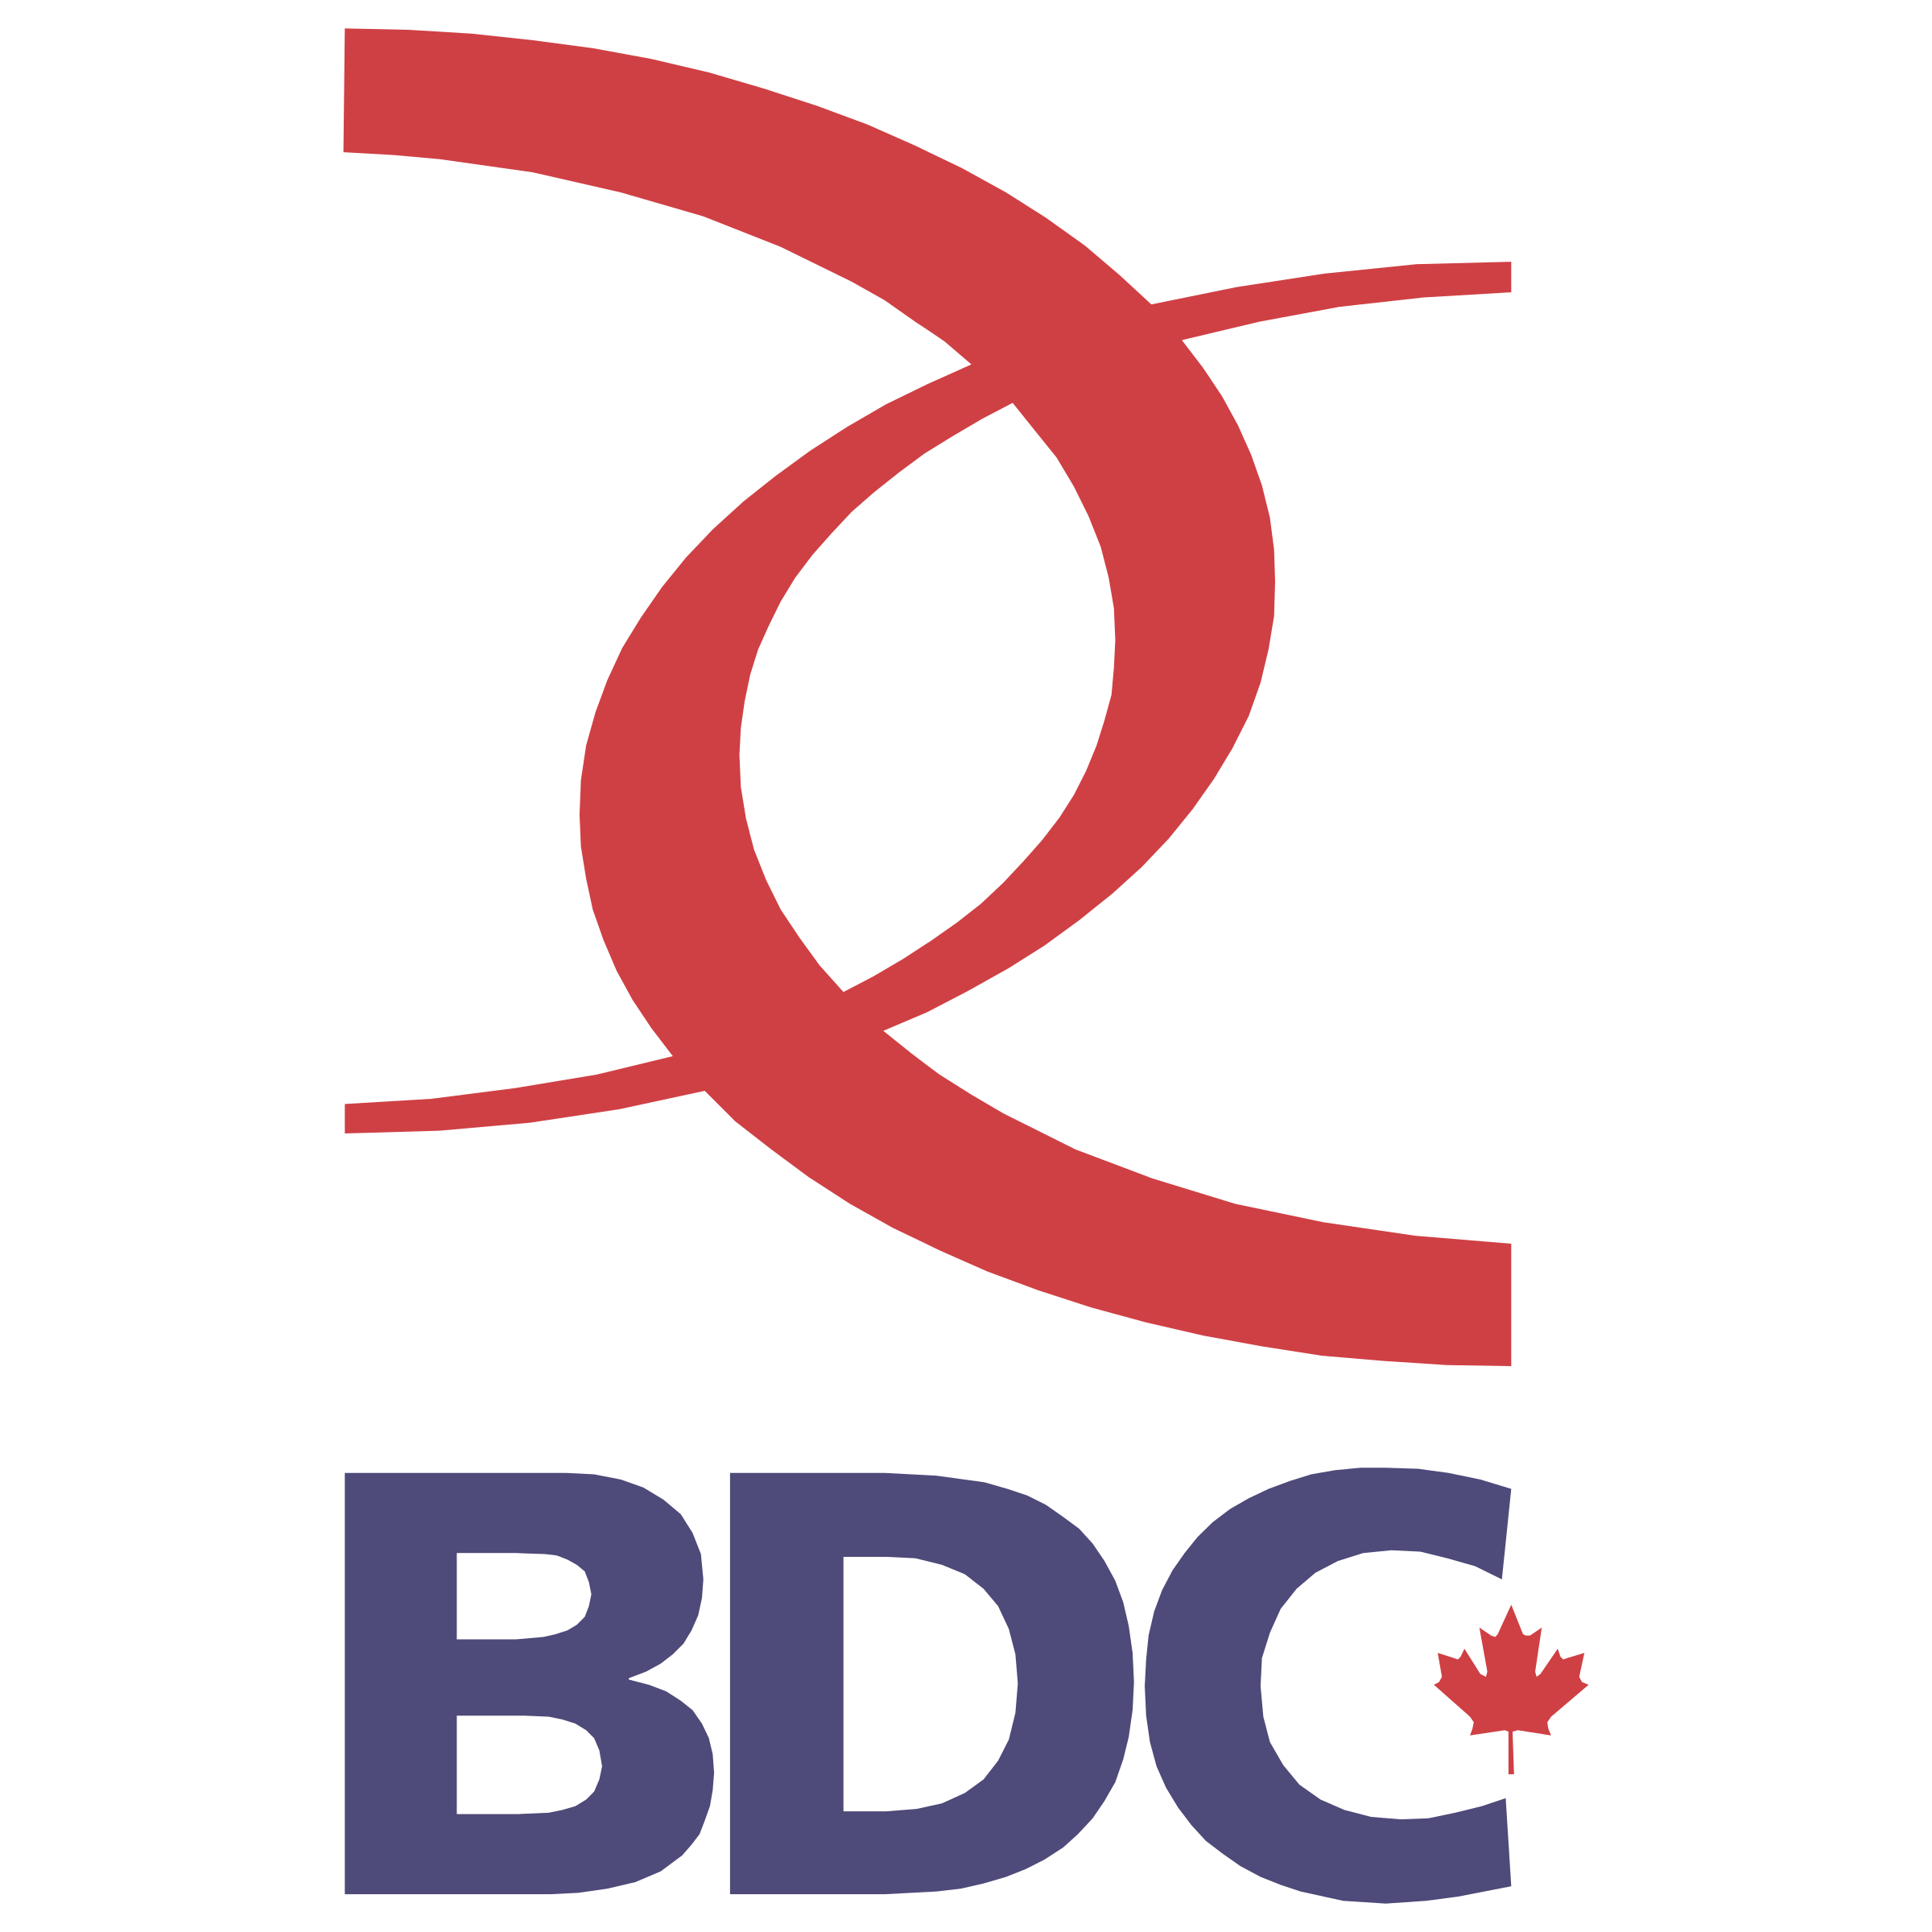 BDC Logo - BDC Logo PNG Transparent & SVG Vector - Freebie Supply